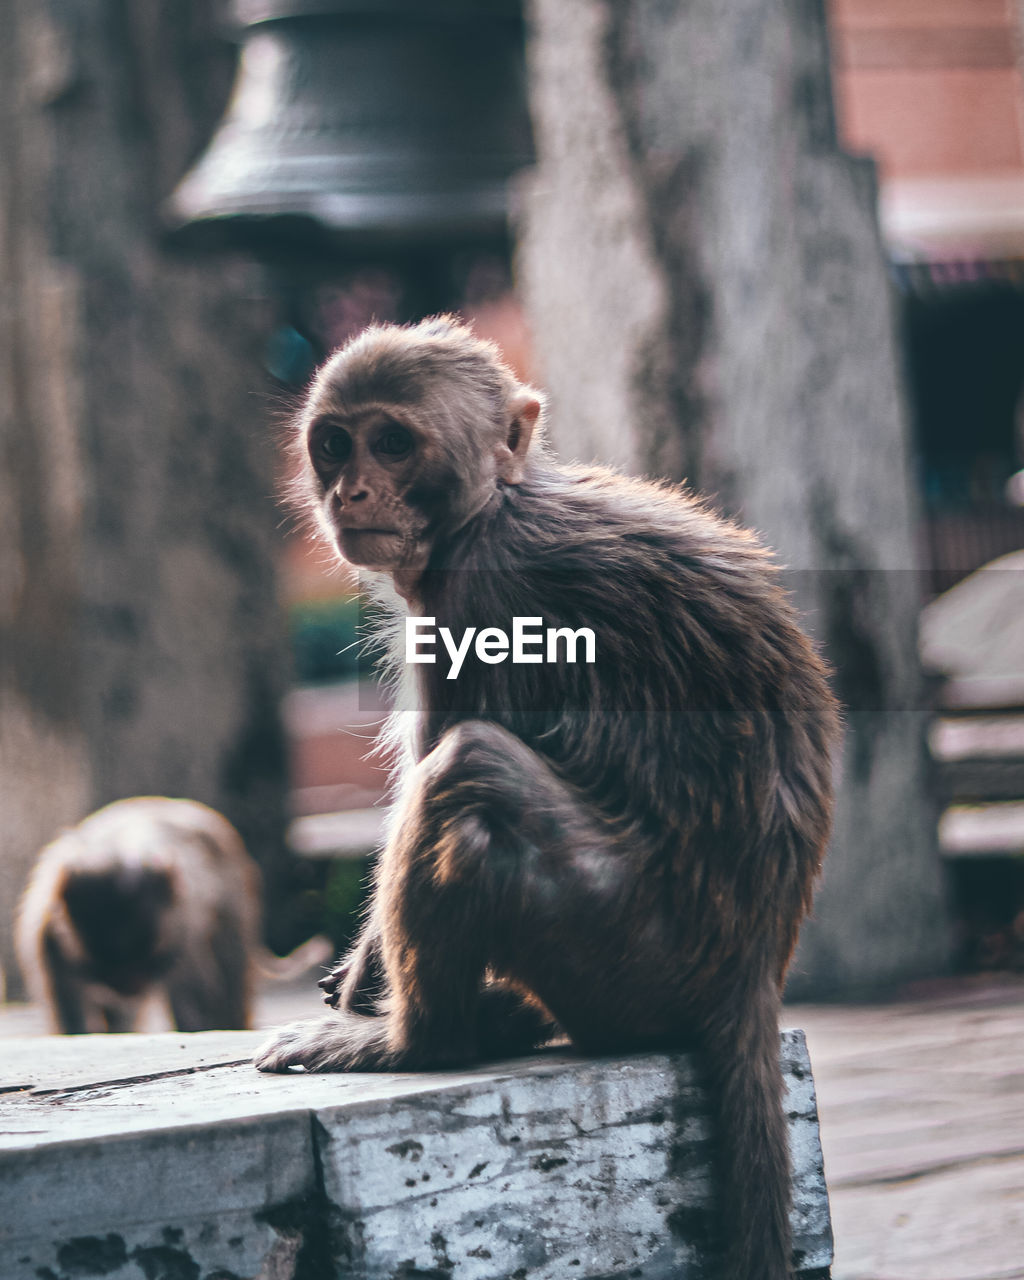 Cute monkey staring at someone.